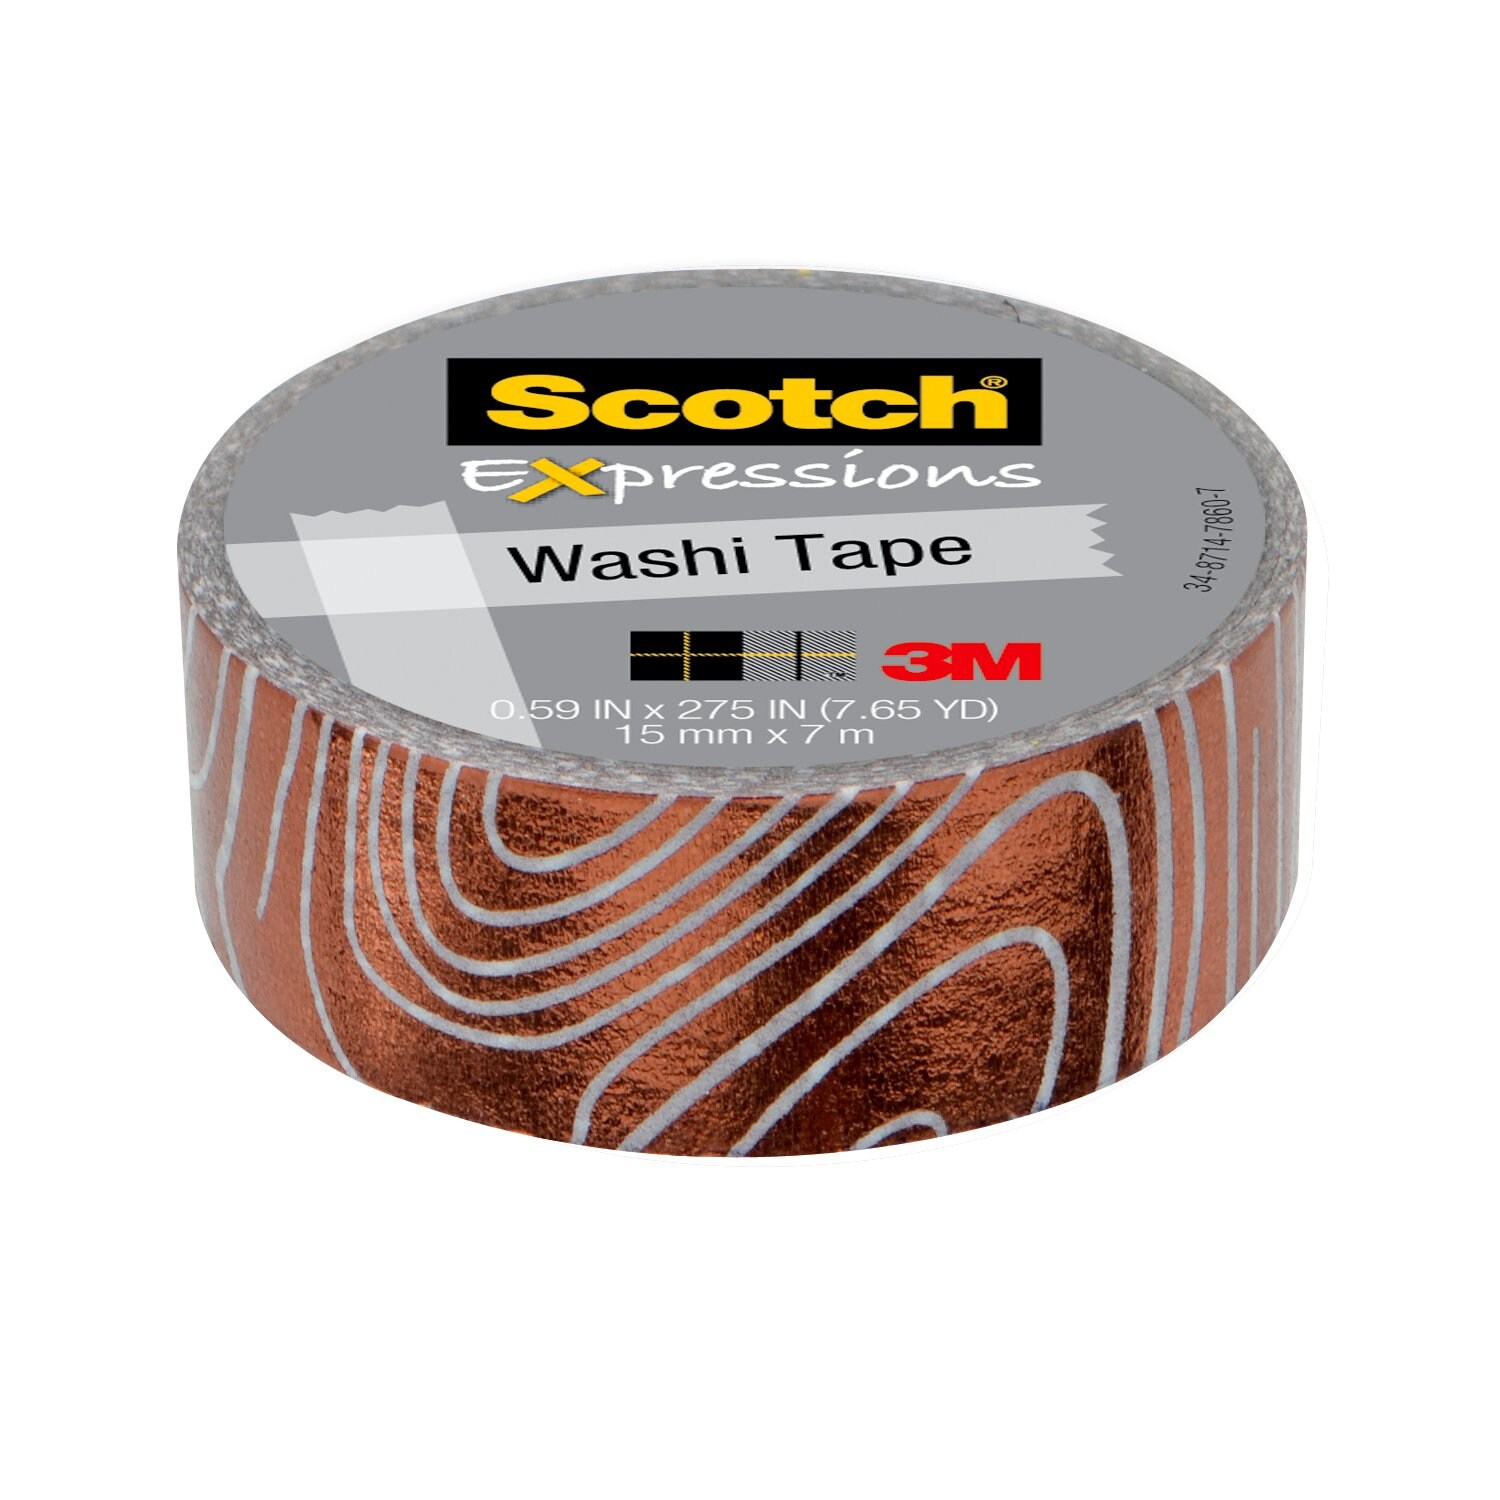 7100096964 - Scotch Expressions Washi Tape C614-P1, White and Copper Foil Swirl